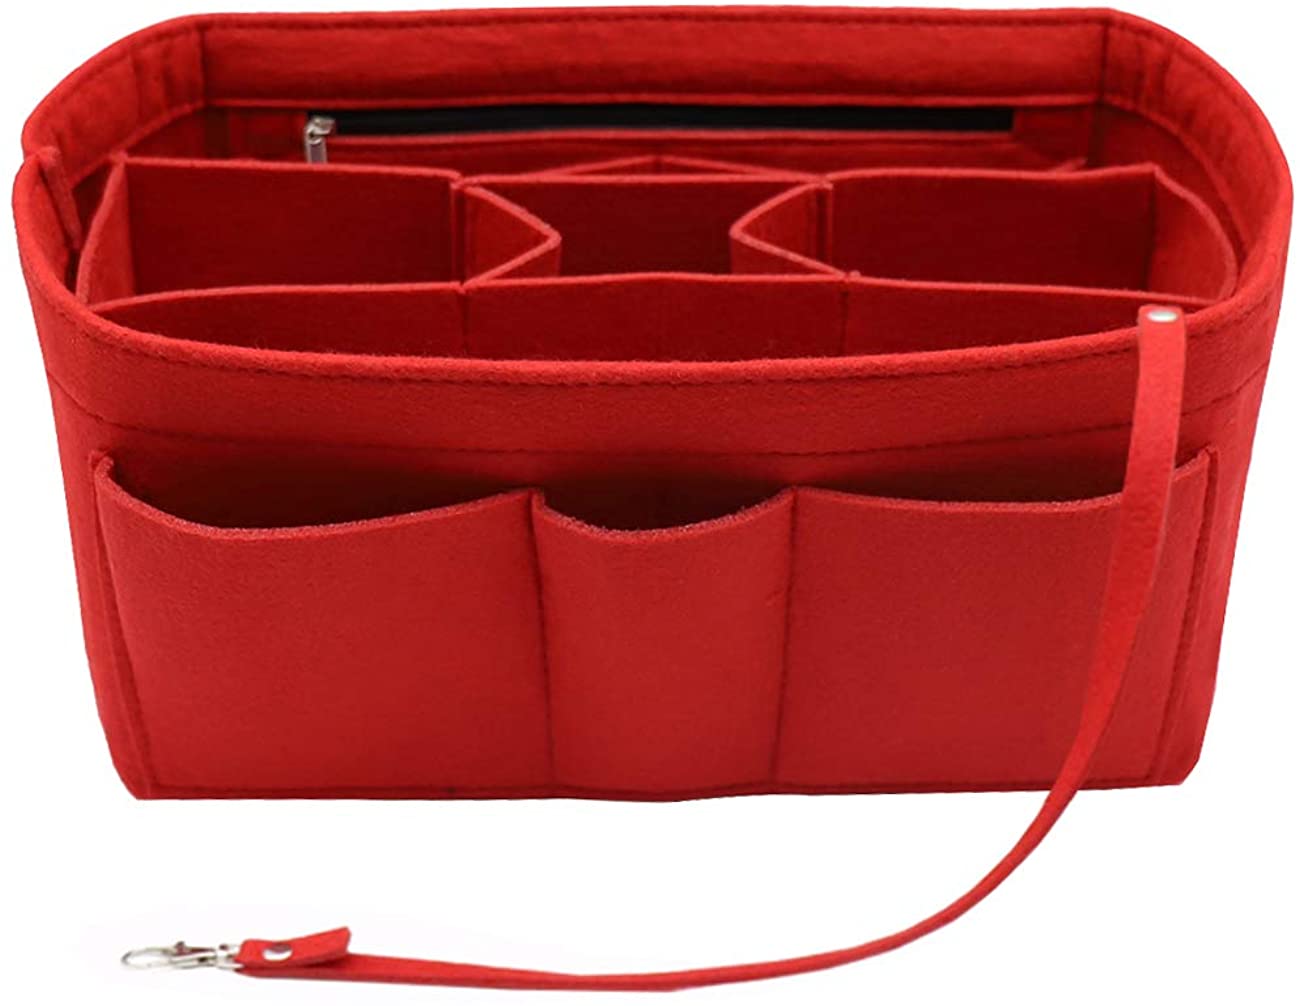 Handbag Insert: 2-in-1 Bag Tote Organiser | Shop Today. Get it Tomorrow! |  takealot.com